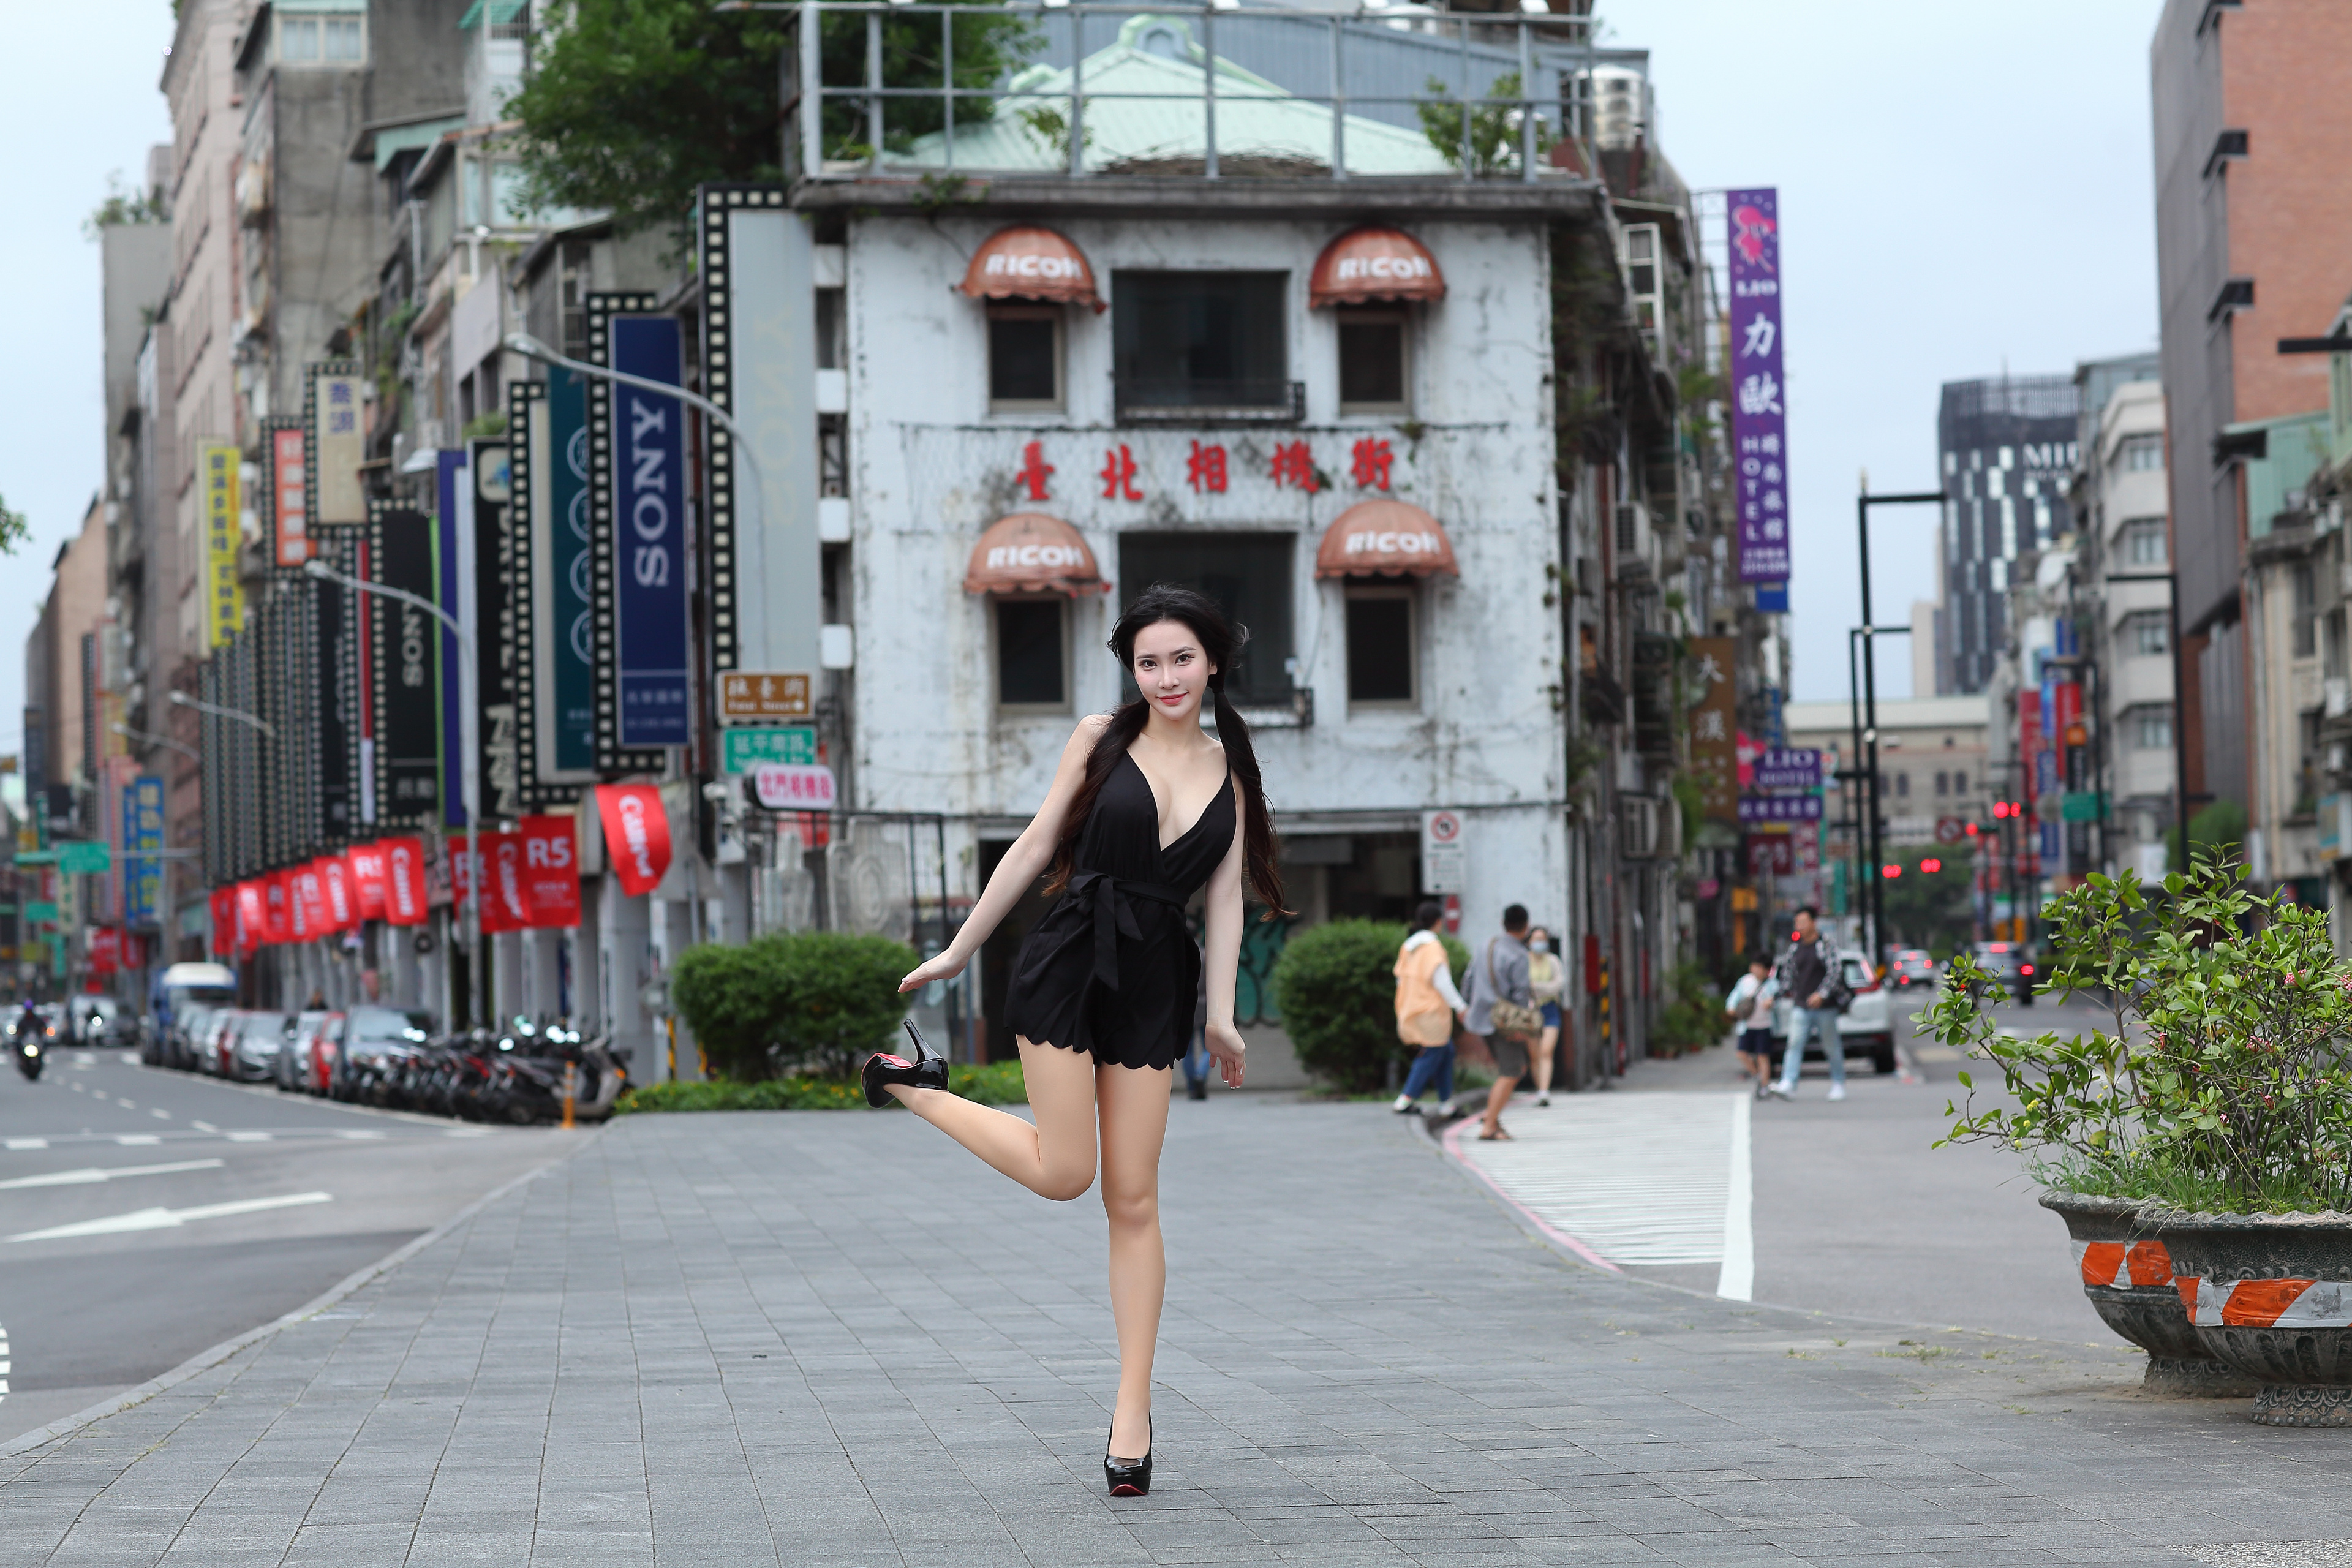 Asian Model Women Long Hair Dark Hair Standing Standing On One Leg Dress Black Dress Urban Plants Ch 3840x2560